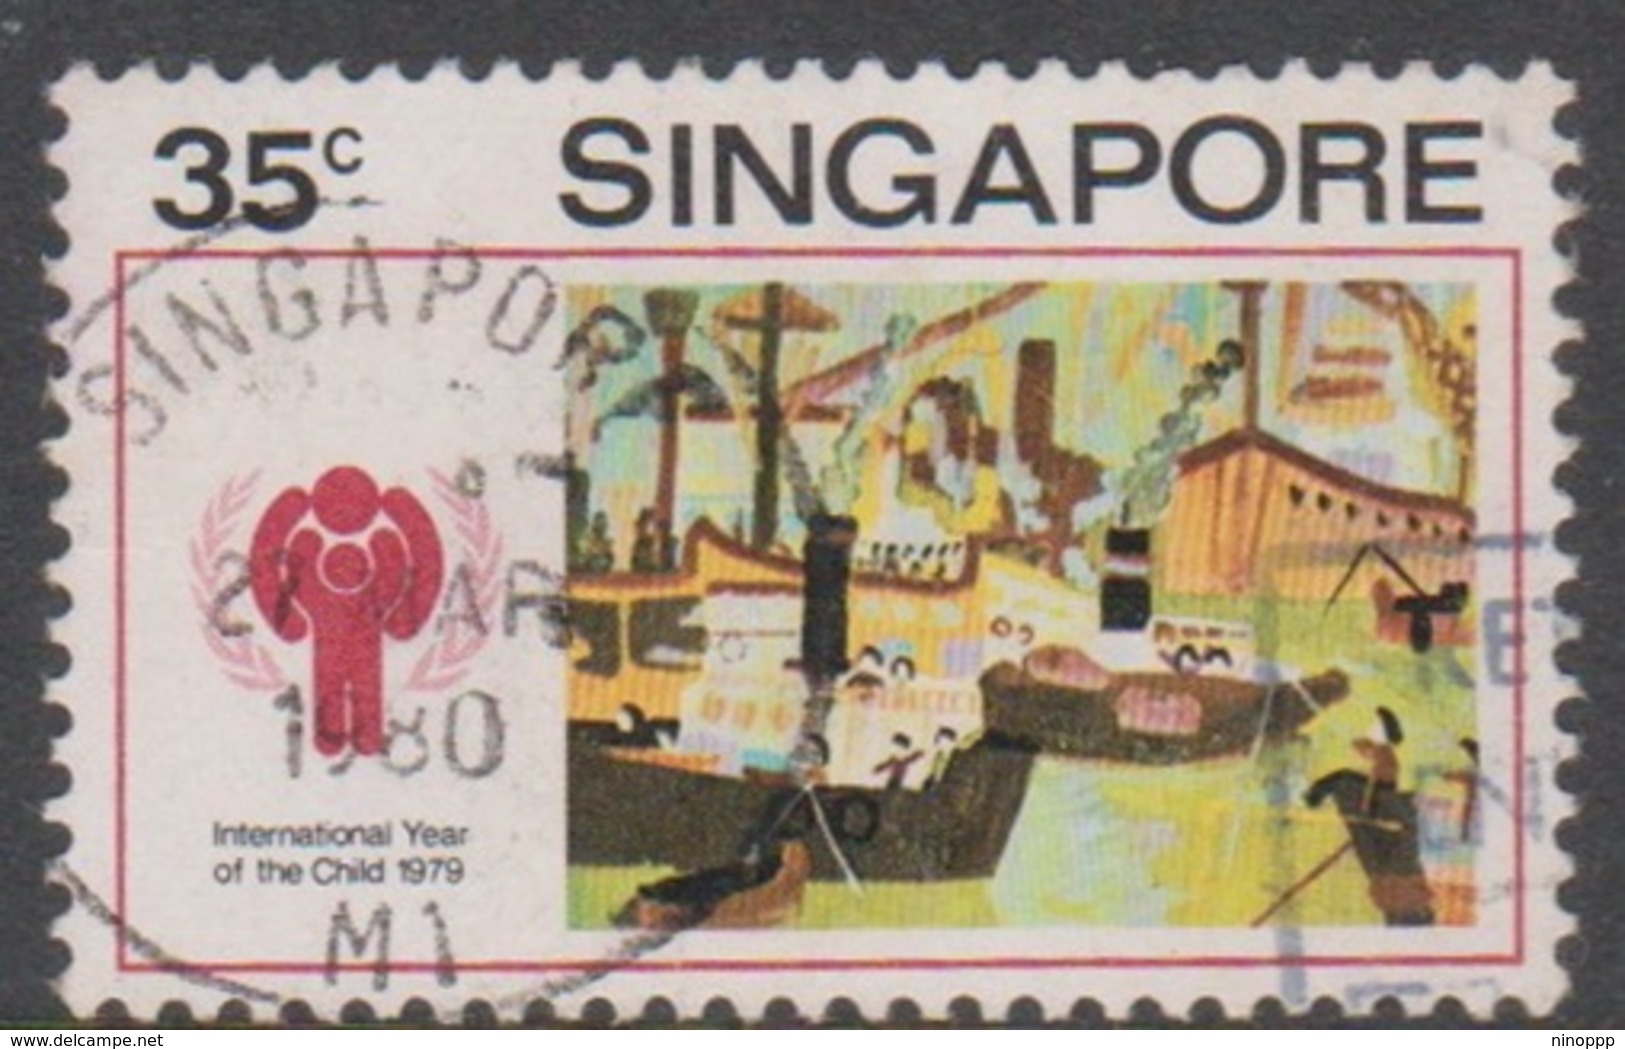 Singapore 361 1979 International Year Of The Child,35c Singapore Harbour, Used - Singapore (1959-...)